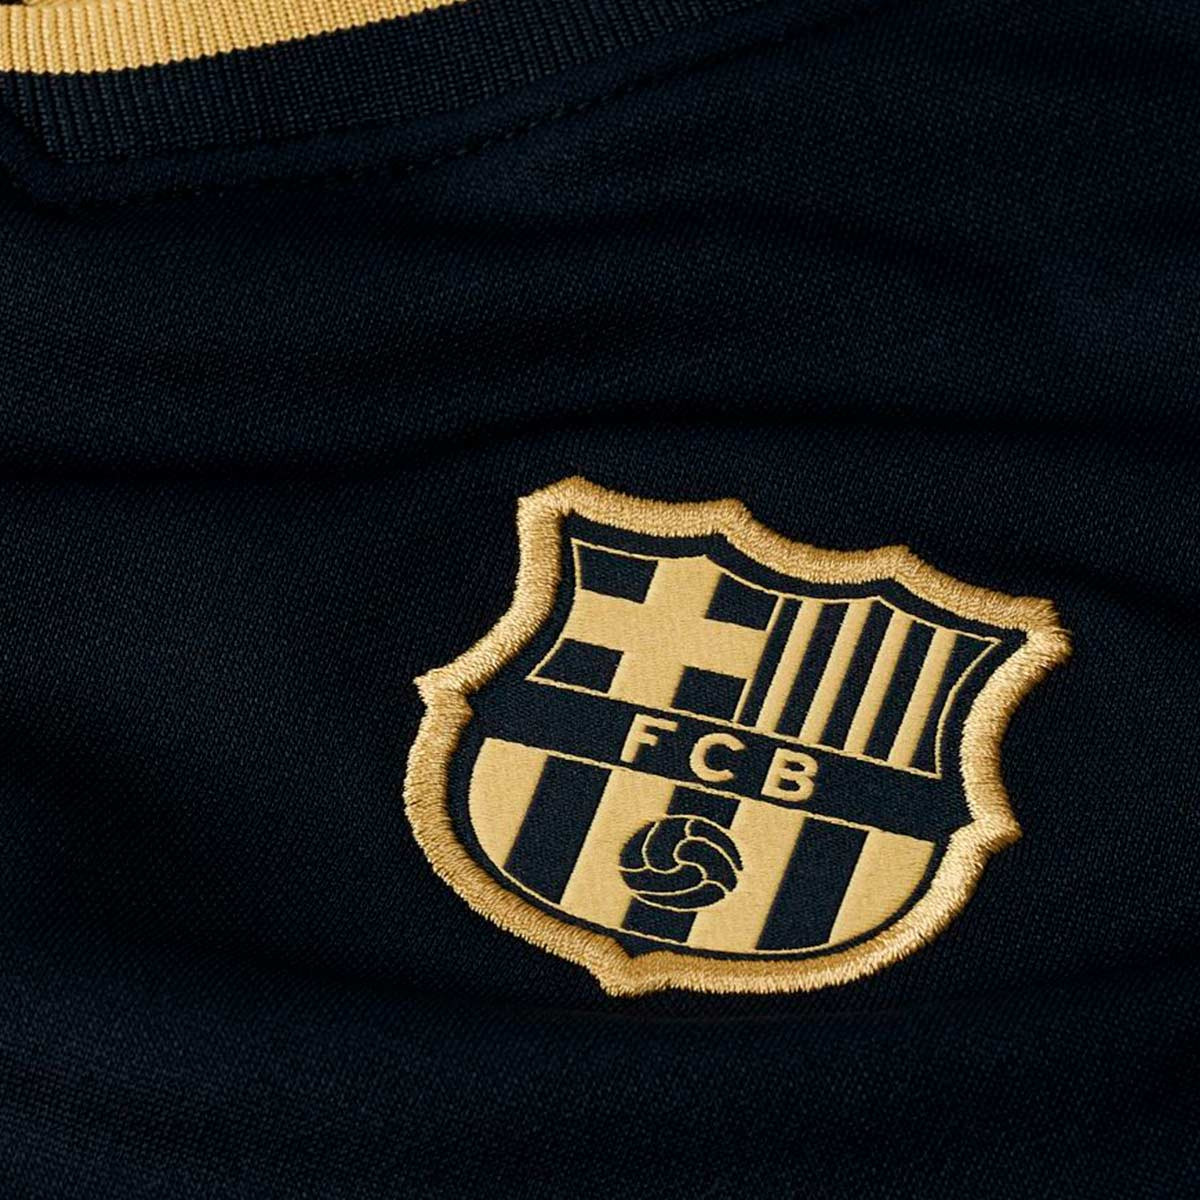 Barca Black And Gold : Barcelona Nike Youth 2020/21 Away Kit - Black ...